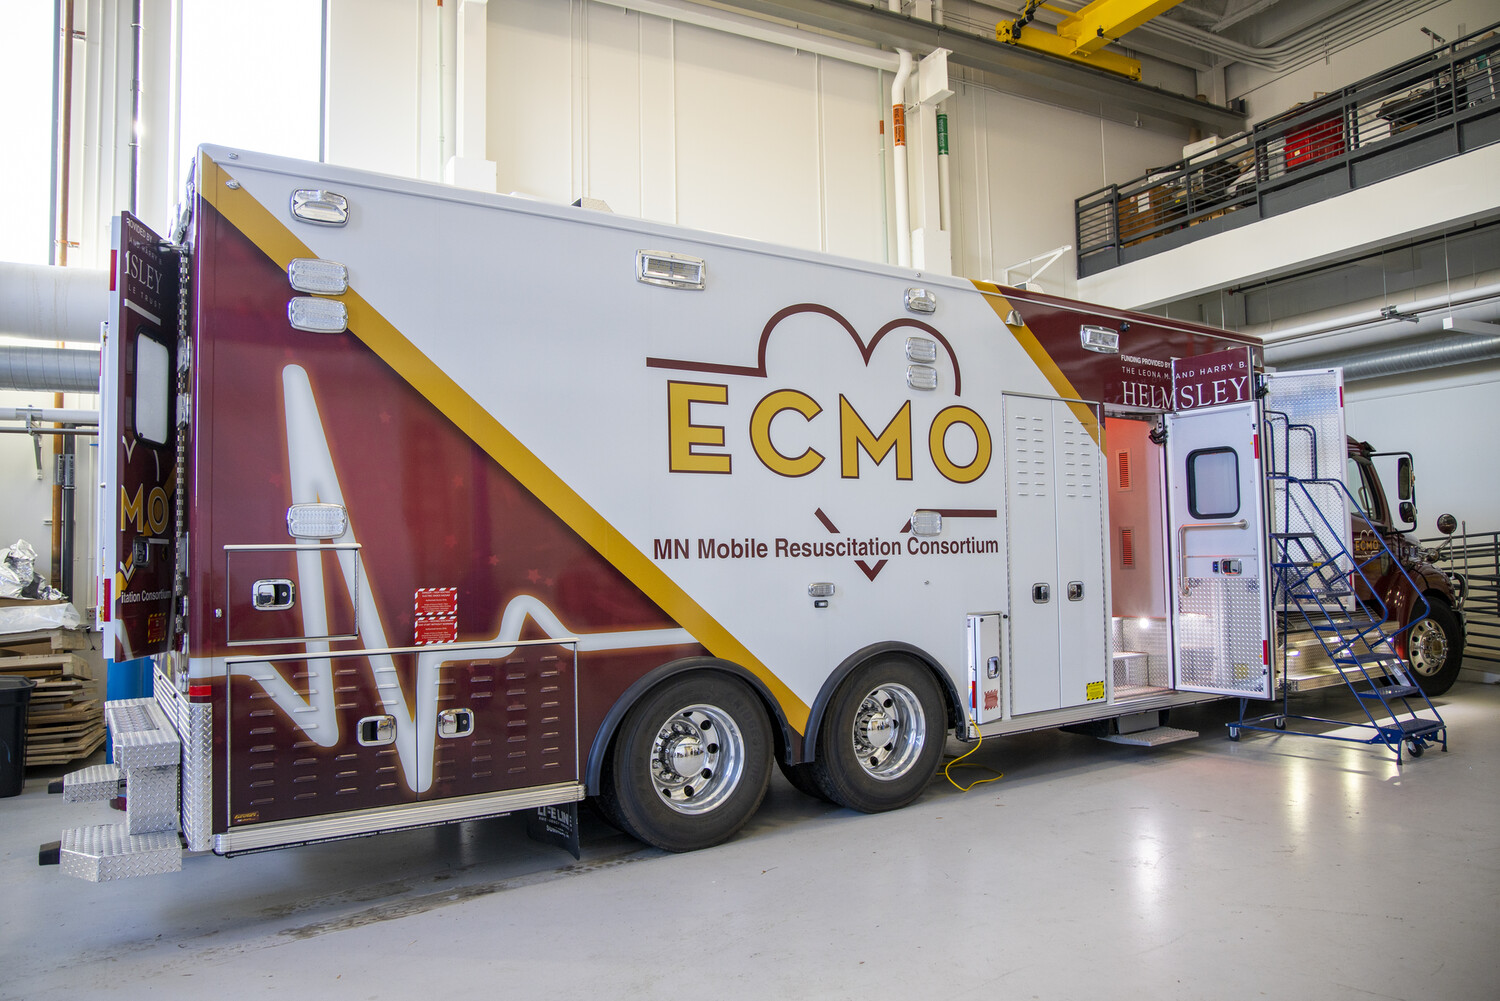 The ECMO truck